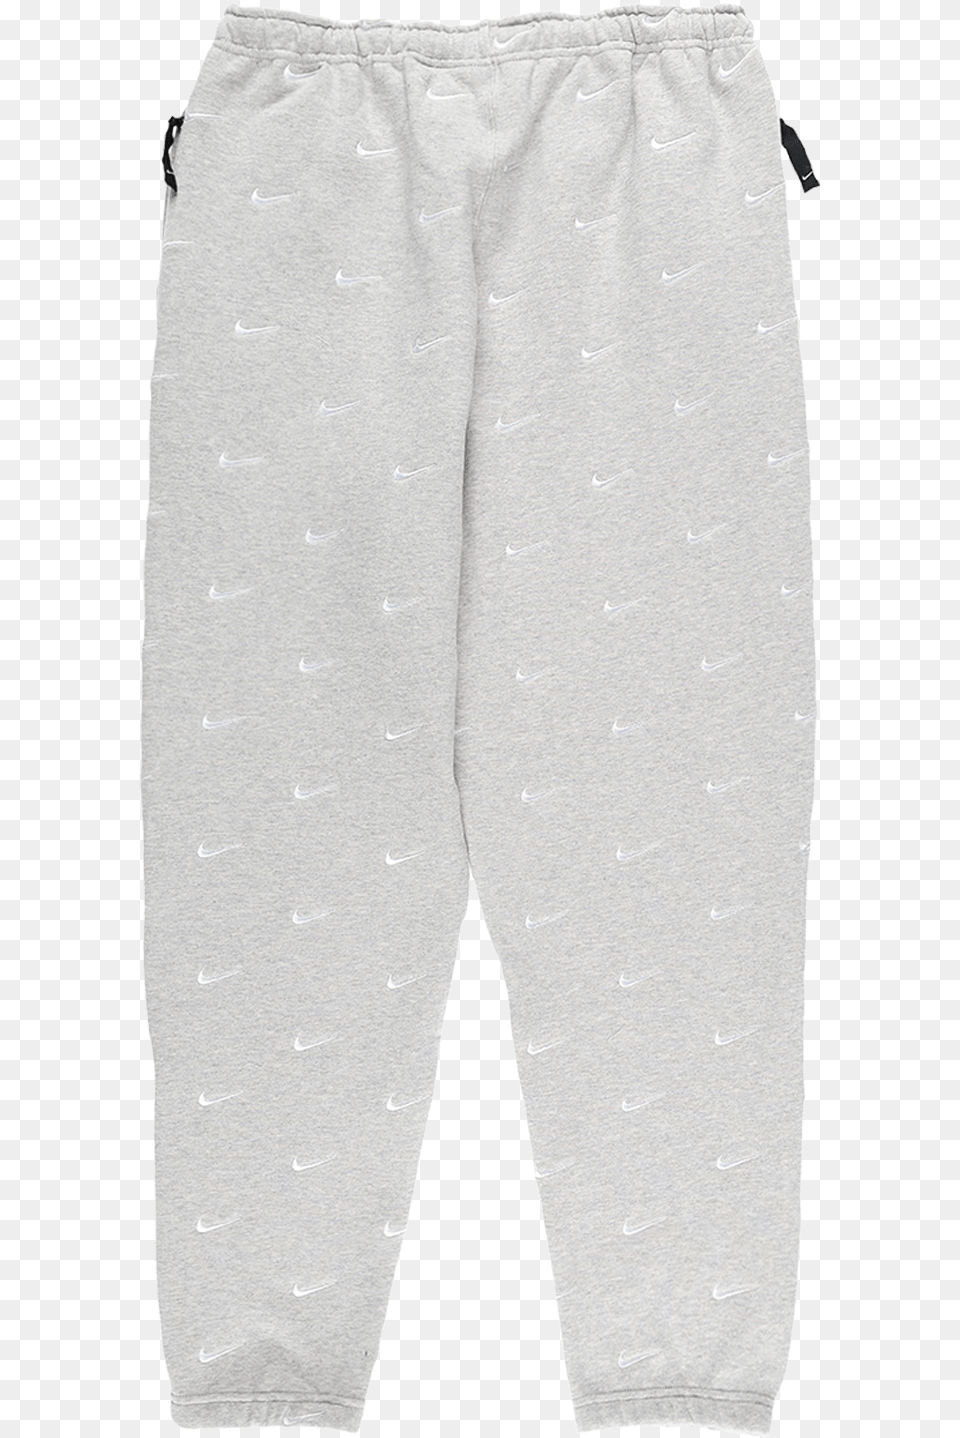 Swoosh Logo Pants Pajamas, Clothing, Shorts, Coat, Home Decor Free Transparent Png